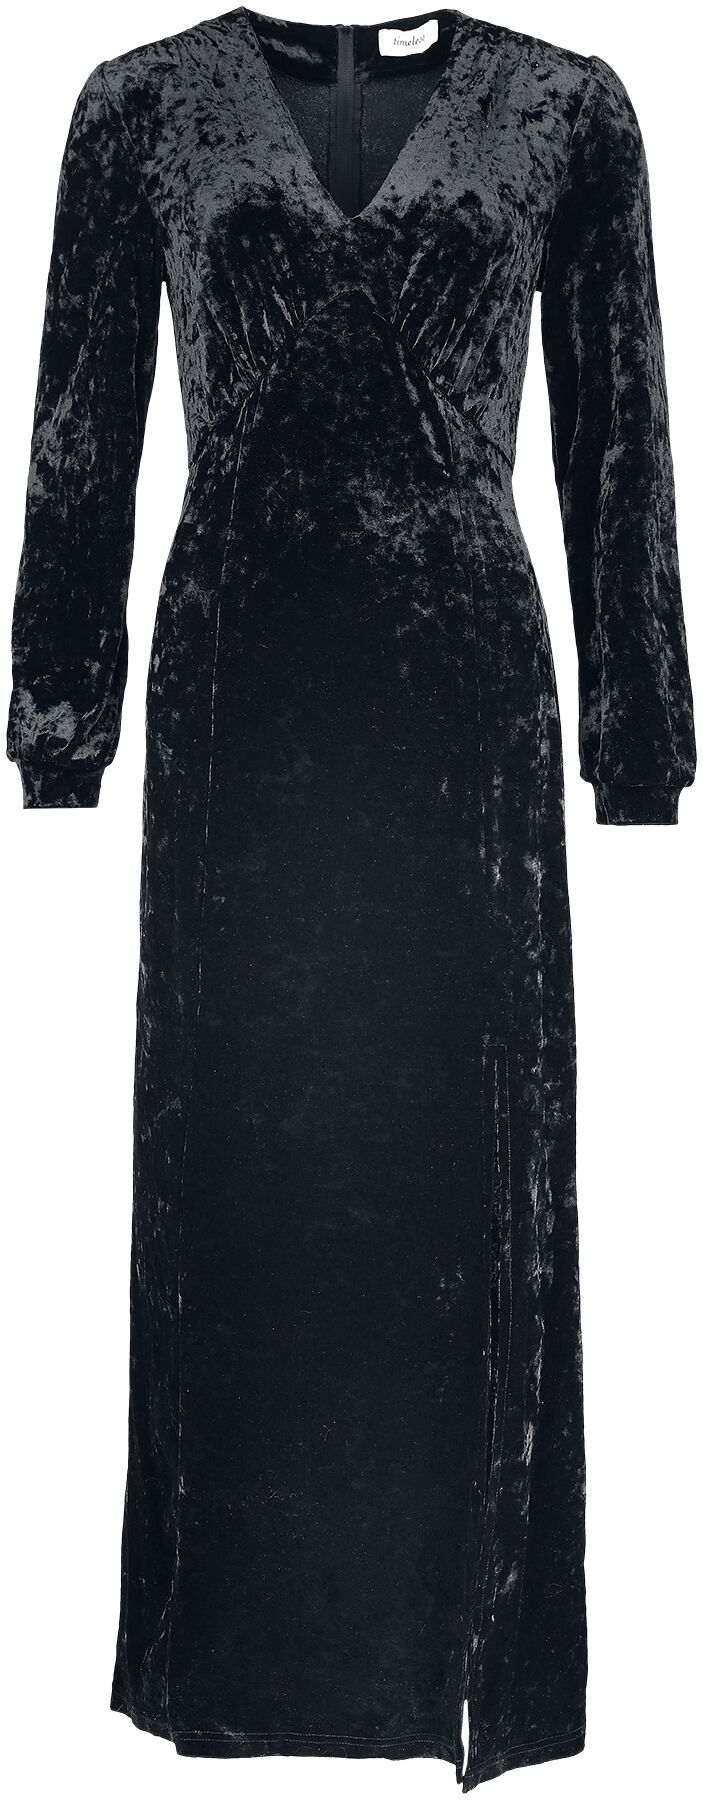 Timeless London Miley Black Dress Langes Kleid schwarz in M